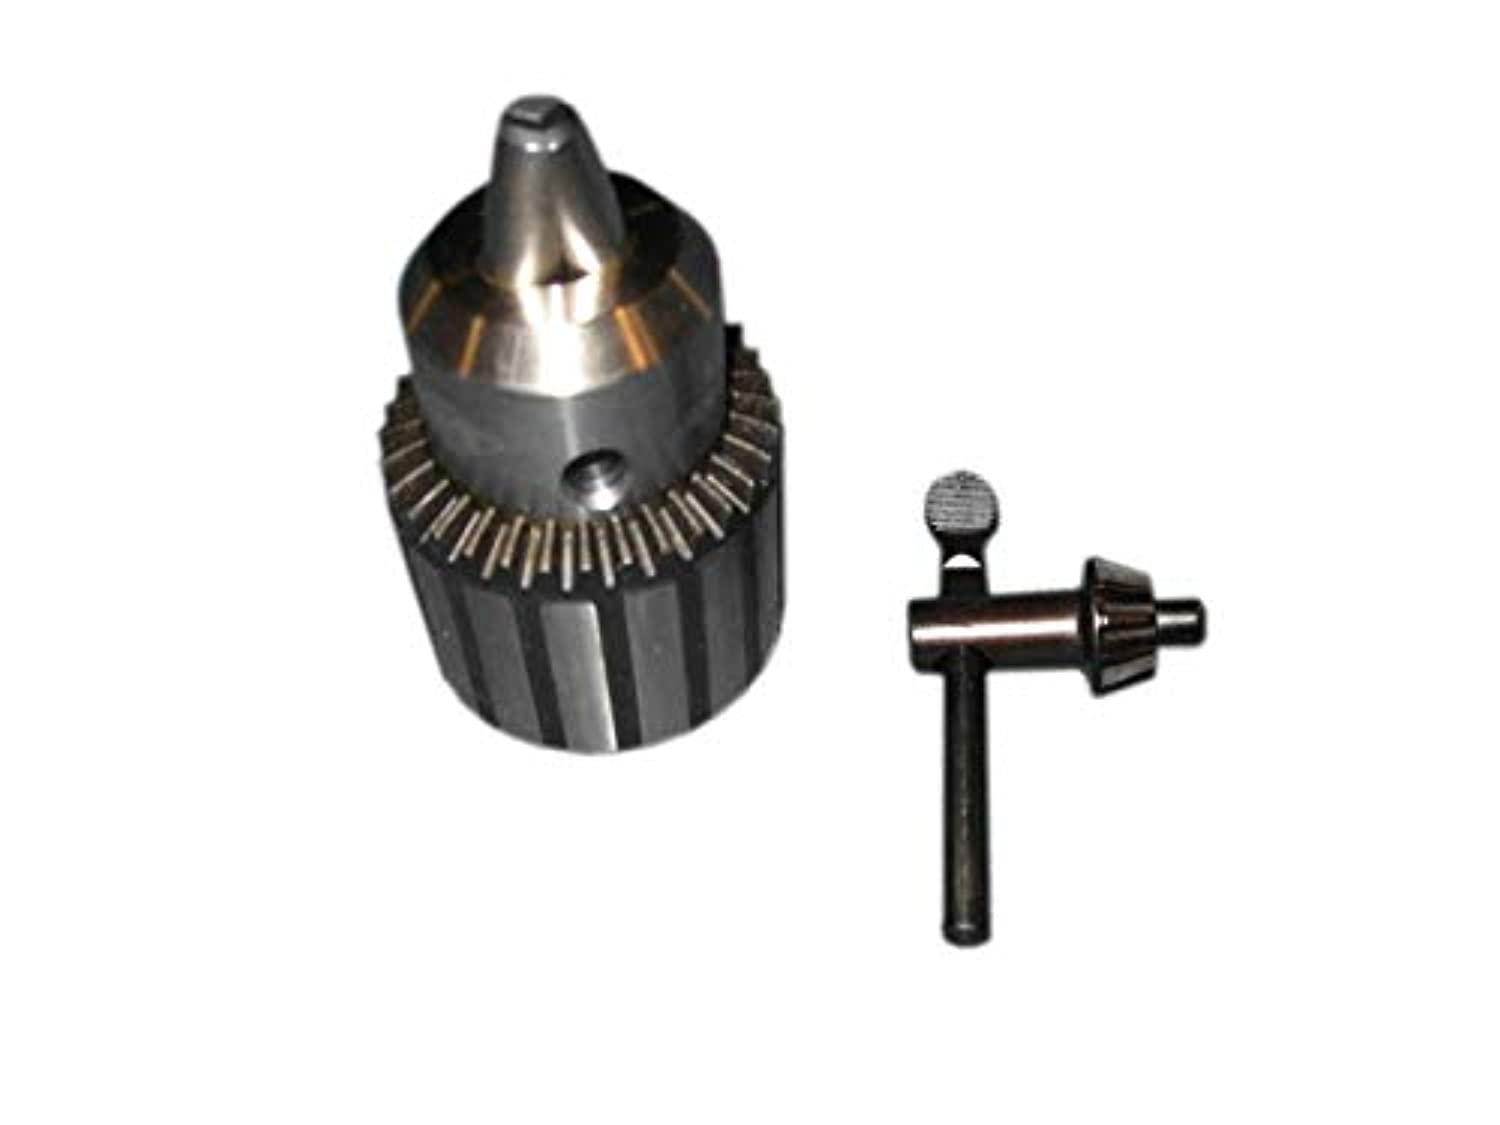 Power Tools Parts new drill chuck 1/2" fits sears craftsman drill press models 315.219140/315219140